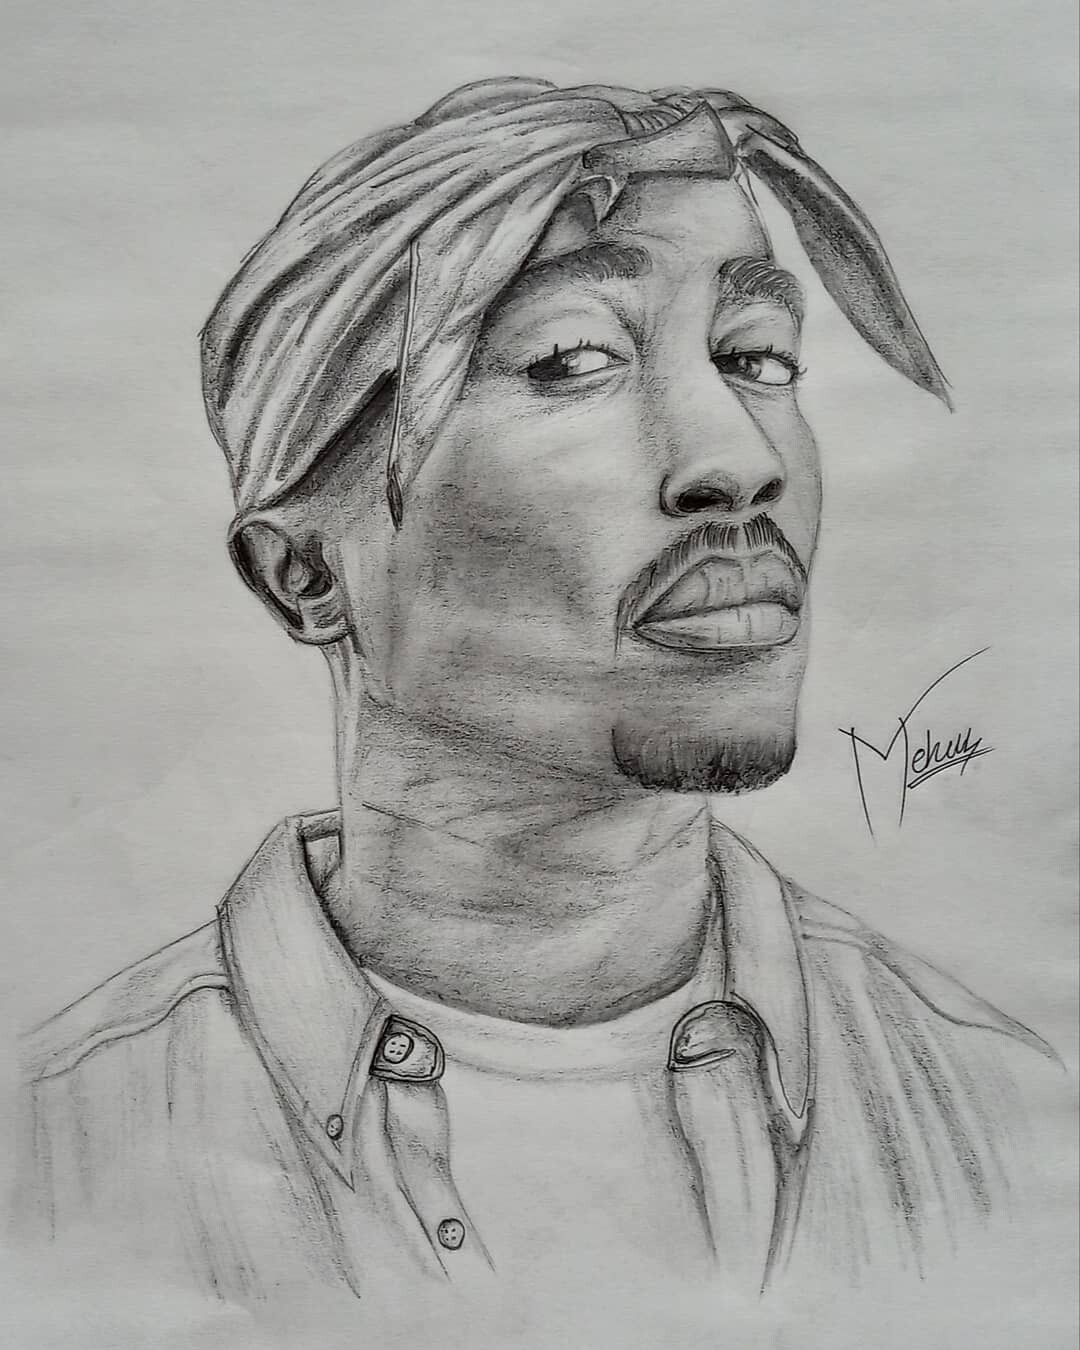 ArtStation - My sketch of Tupac shakur